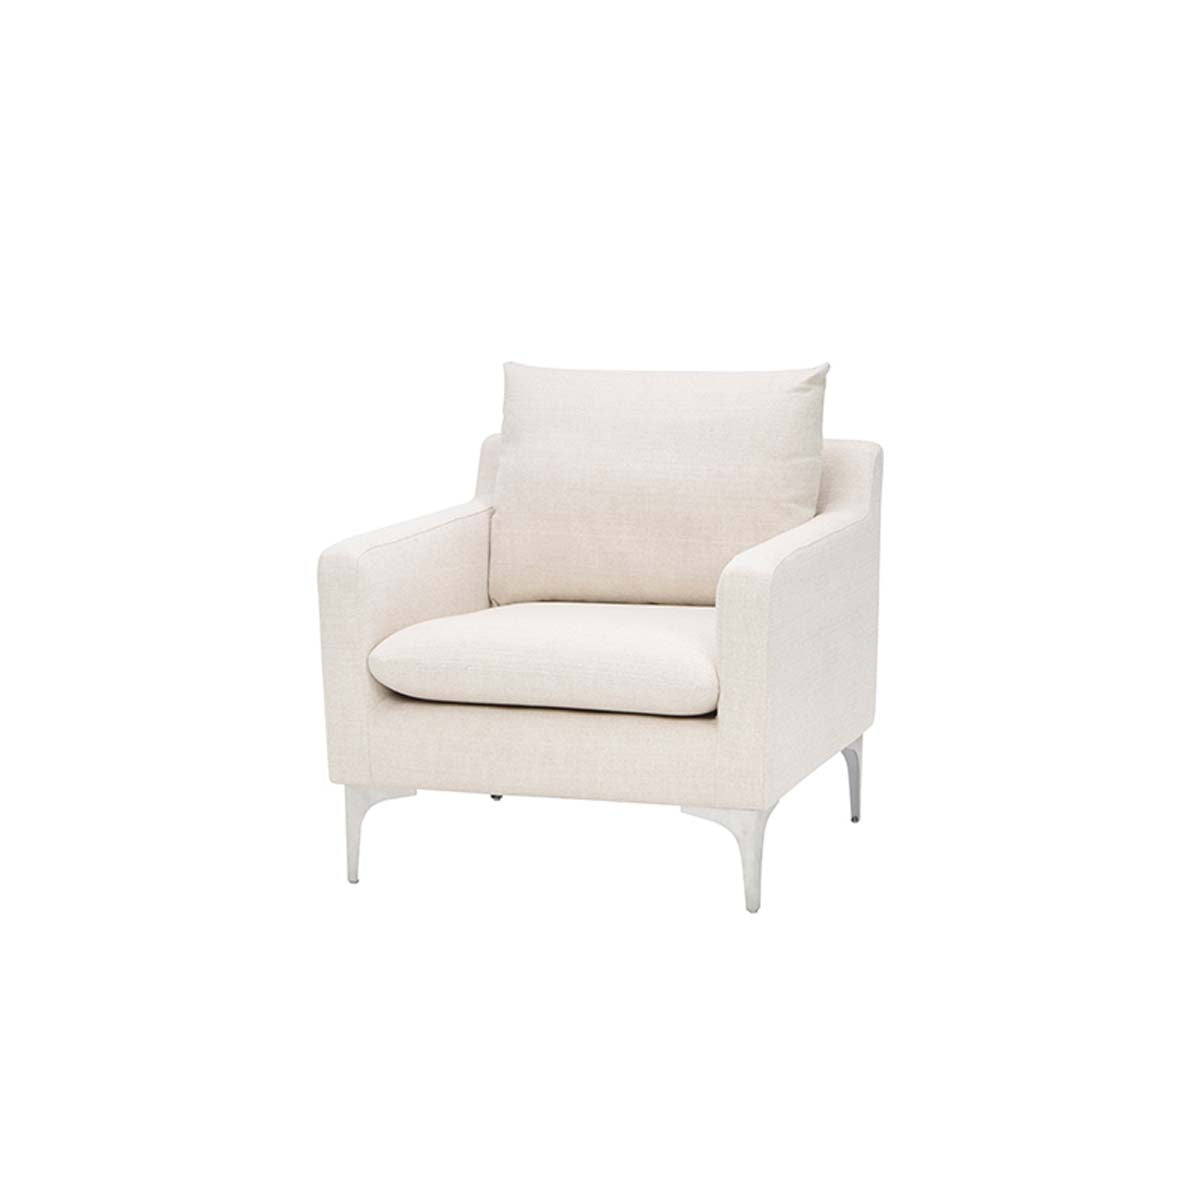 Nuevo Anders Single Seat Sofa